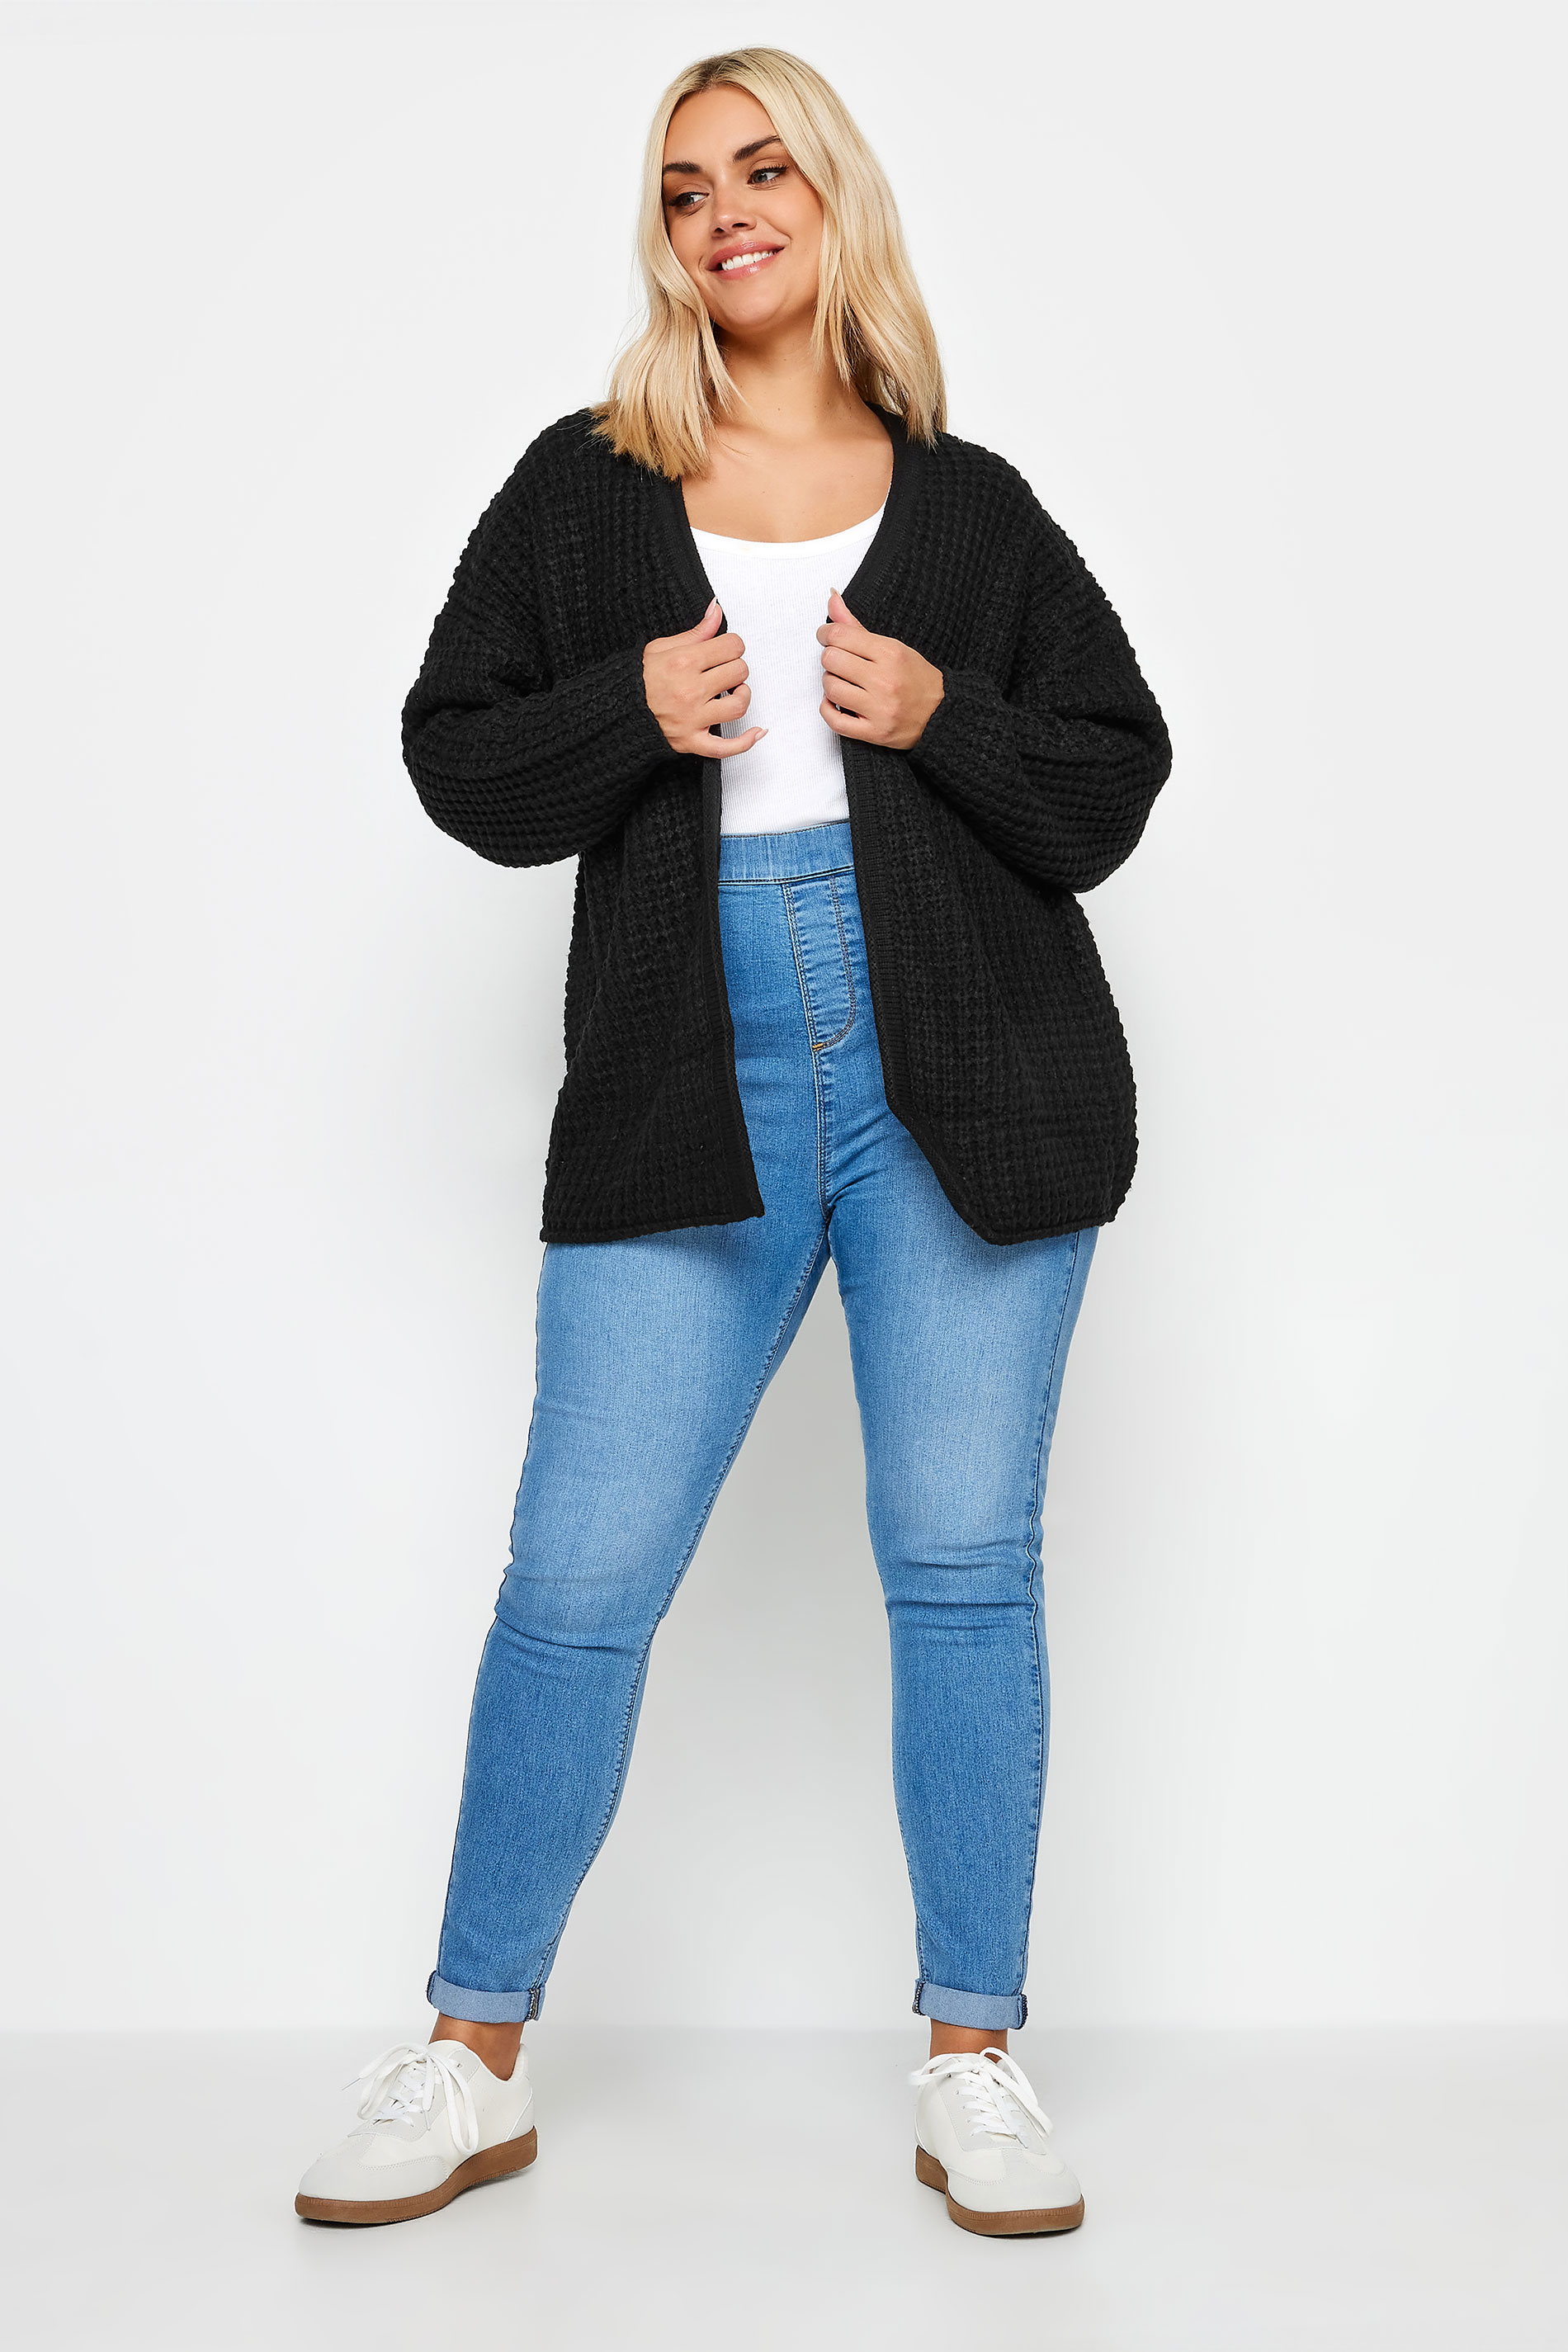 YOURS Plus Size Black Waffle Knit Cardigan | Yours Clothing 3